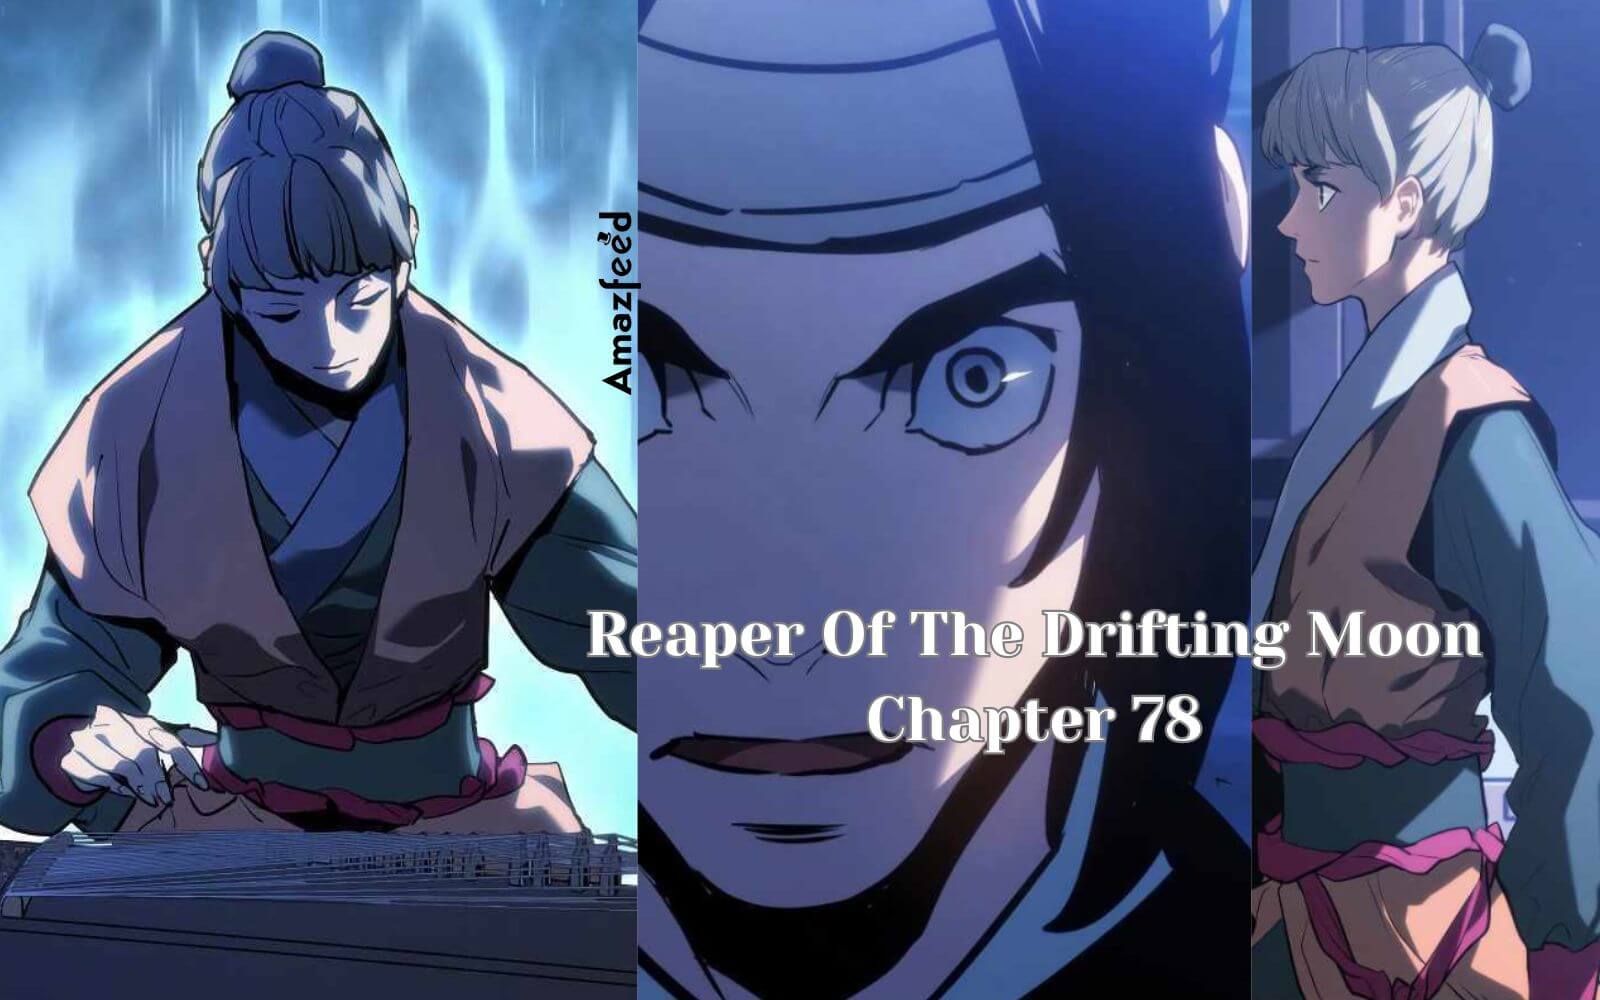 Reaper Of The Drifting Moon Chapter 78 spoiler